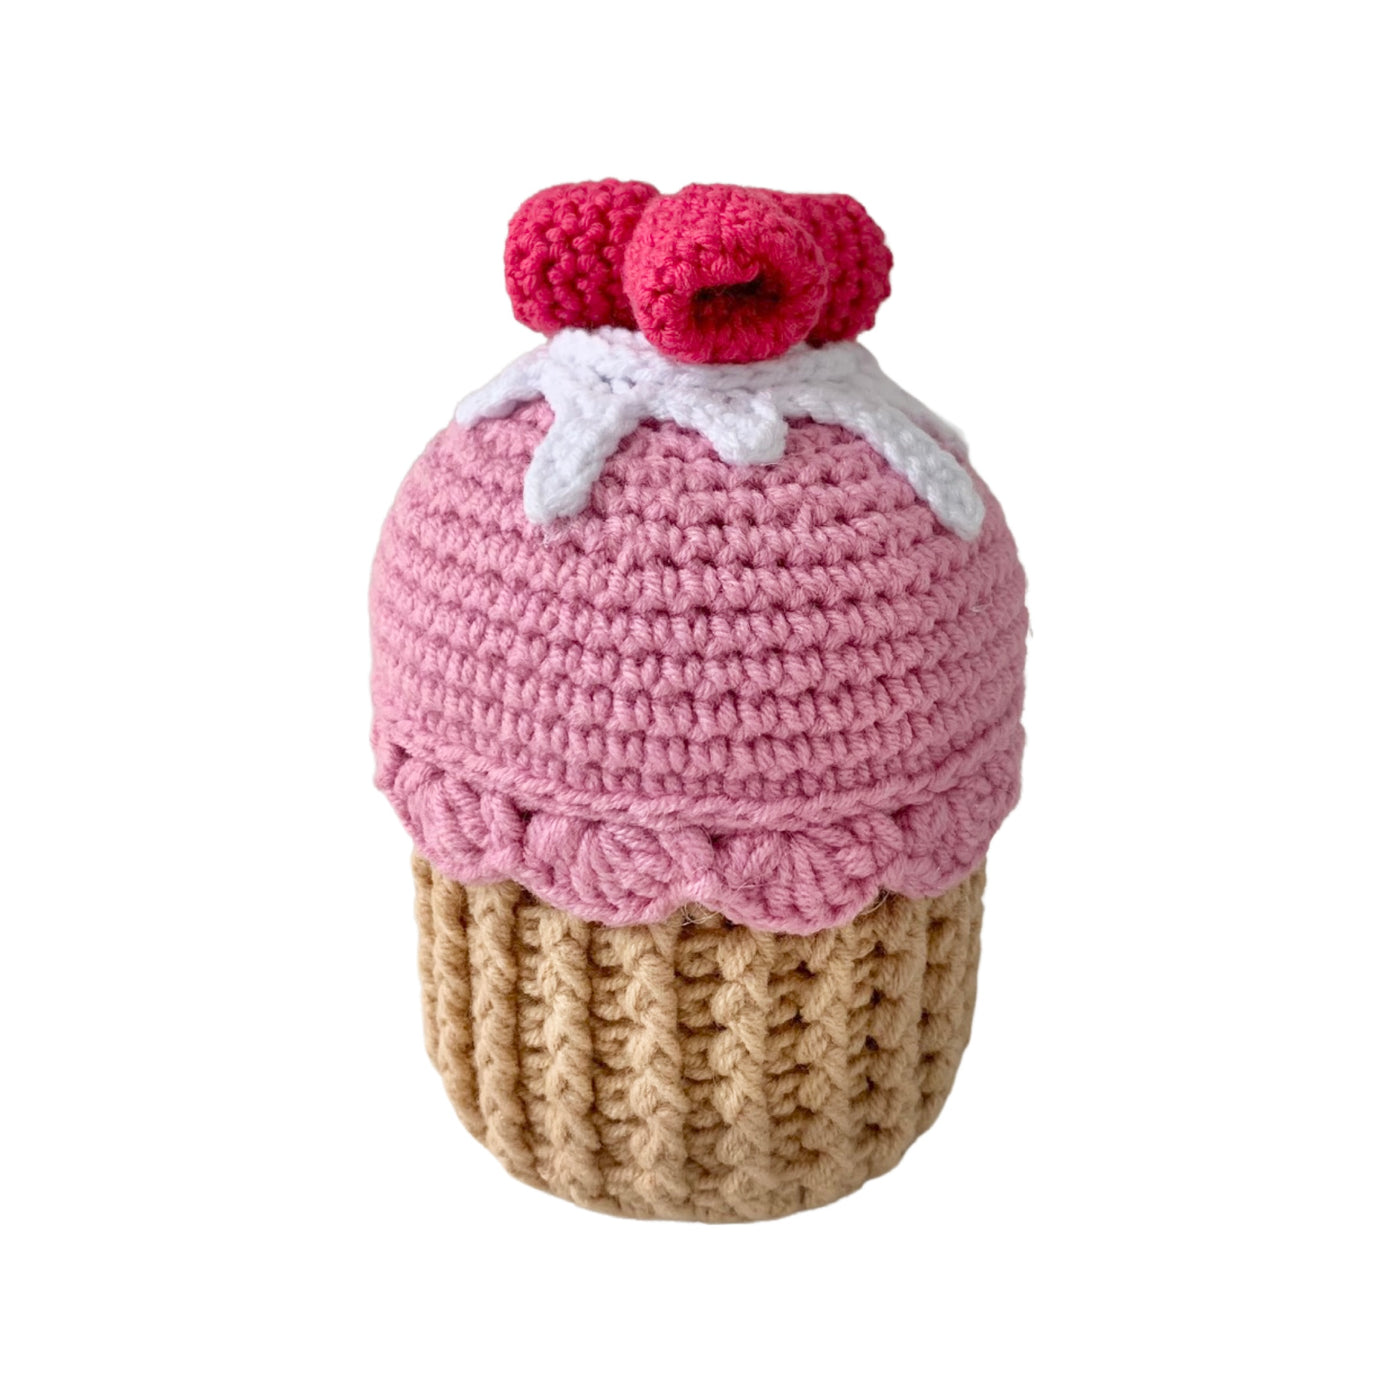 Raspberry Cupcake